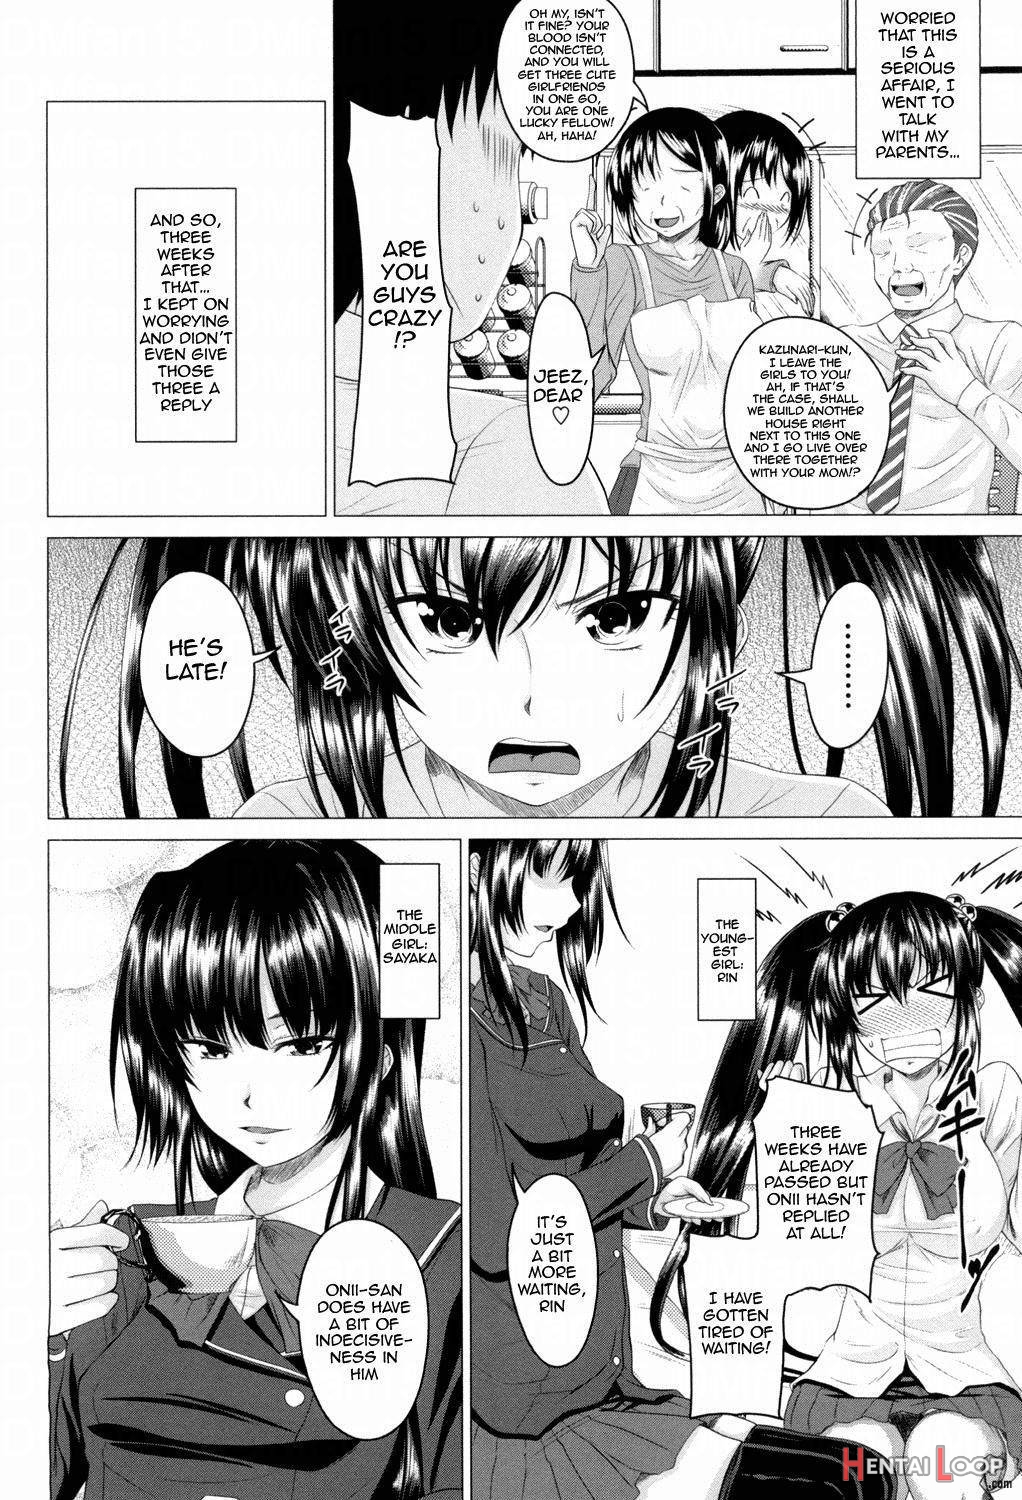 Hatsujou Sex Days page 5